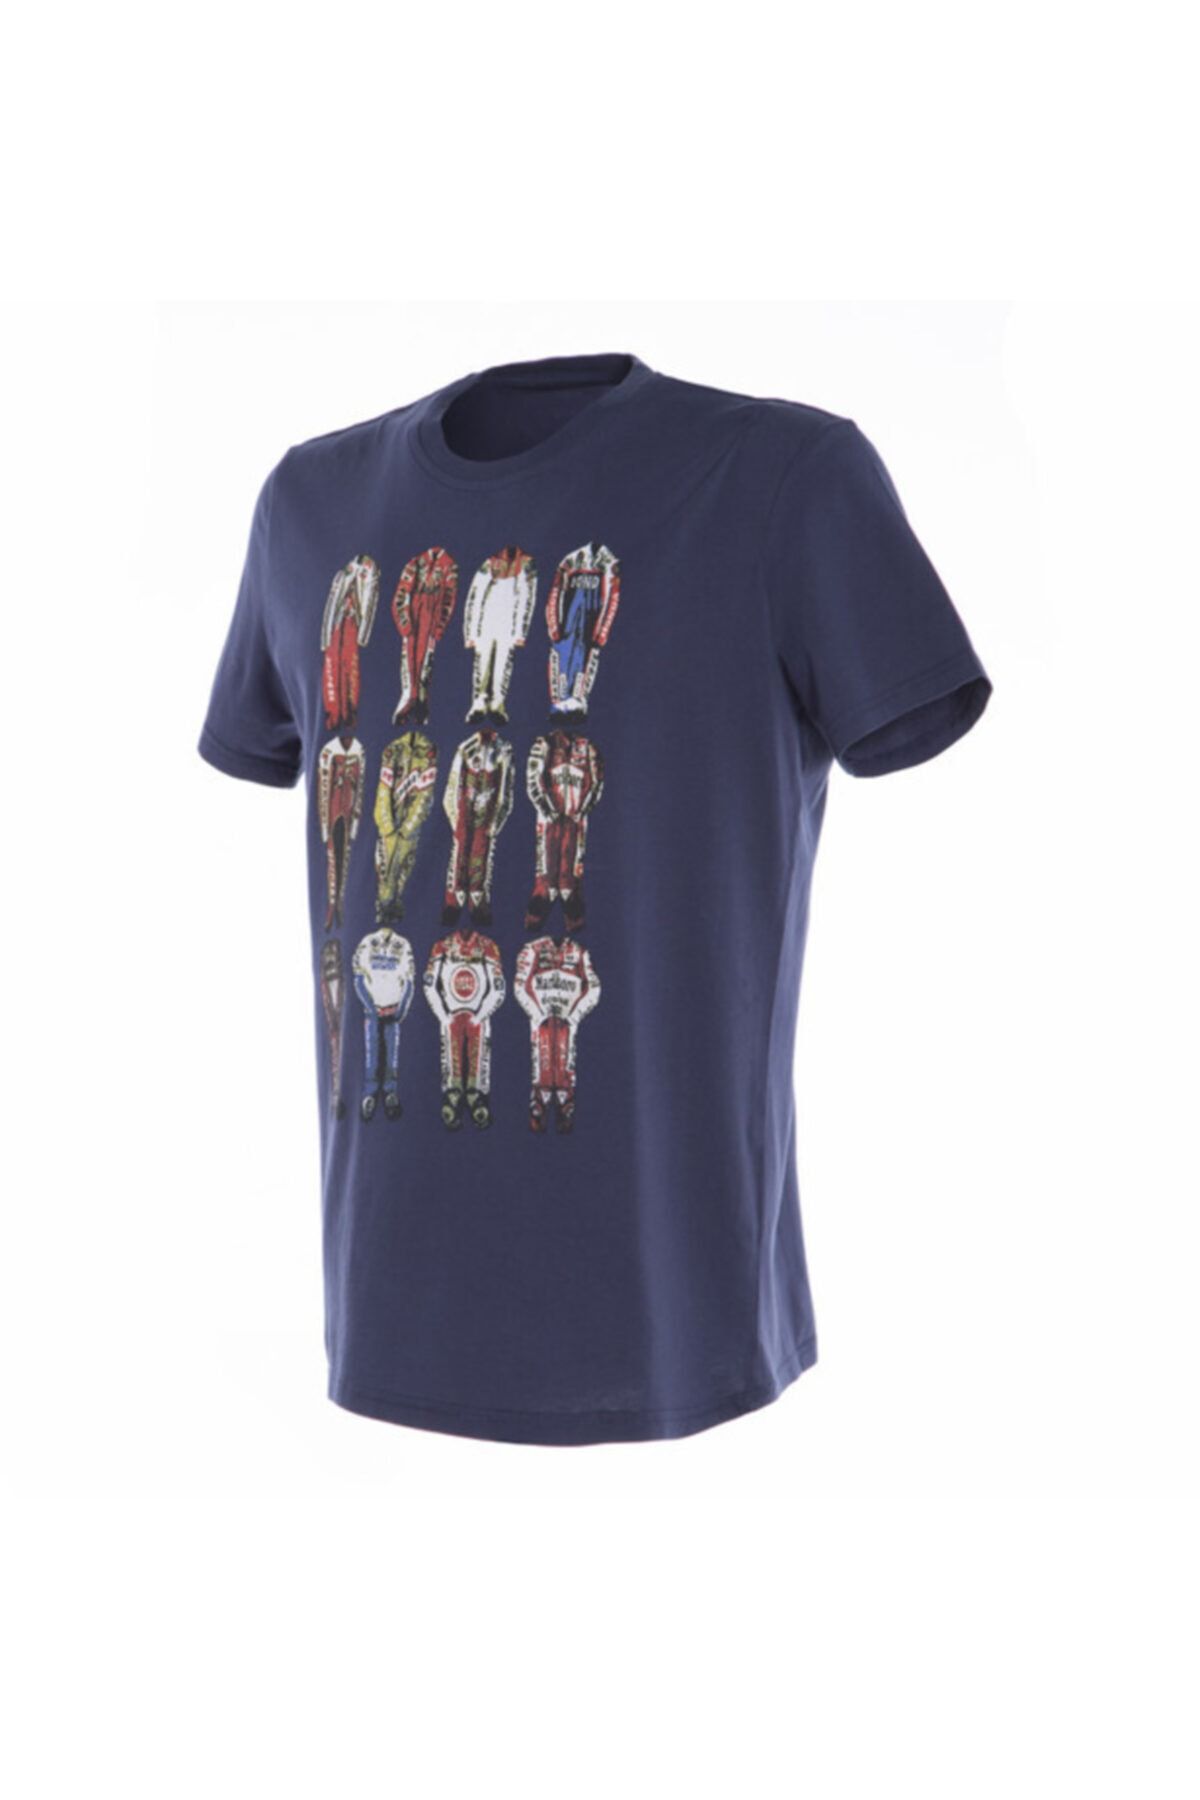 Dainese Erkek Lacivert12champions T-shirt